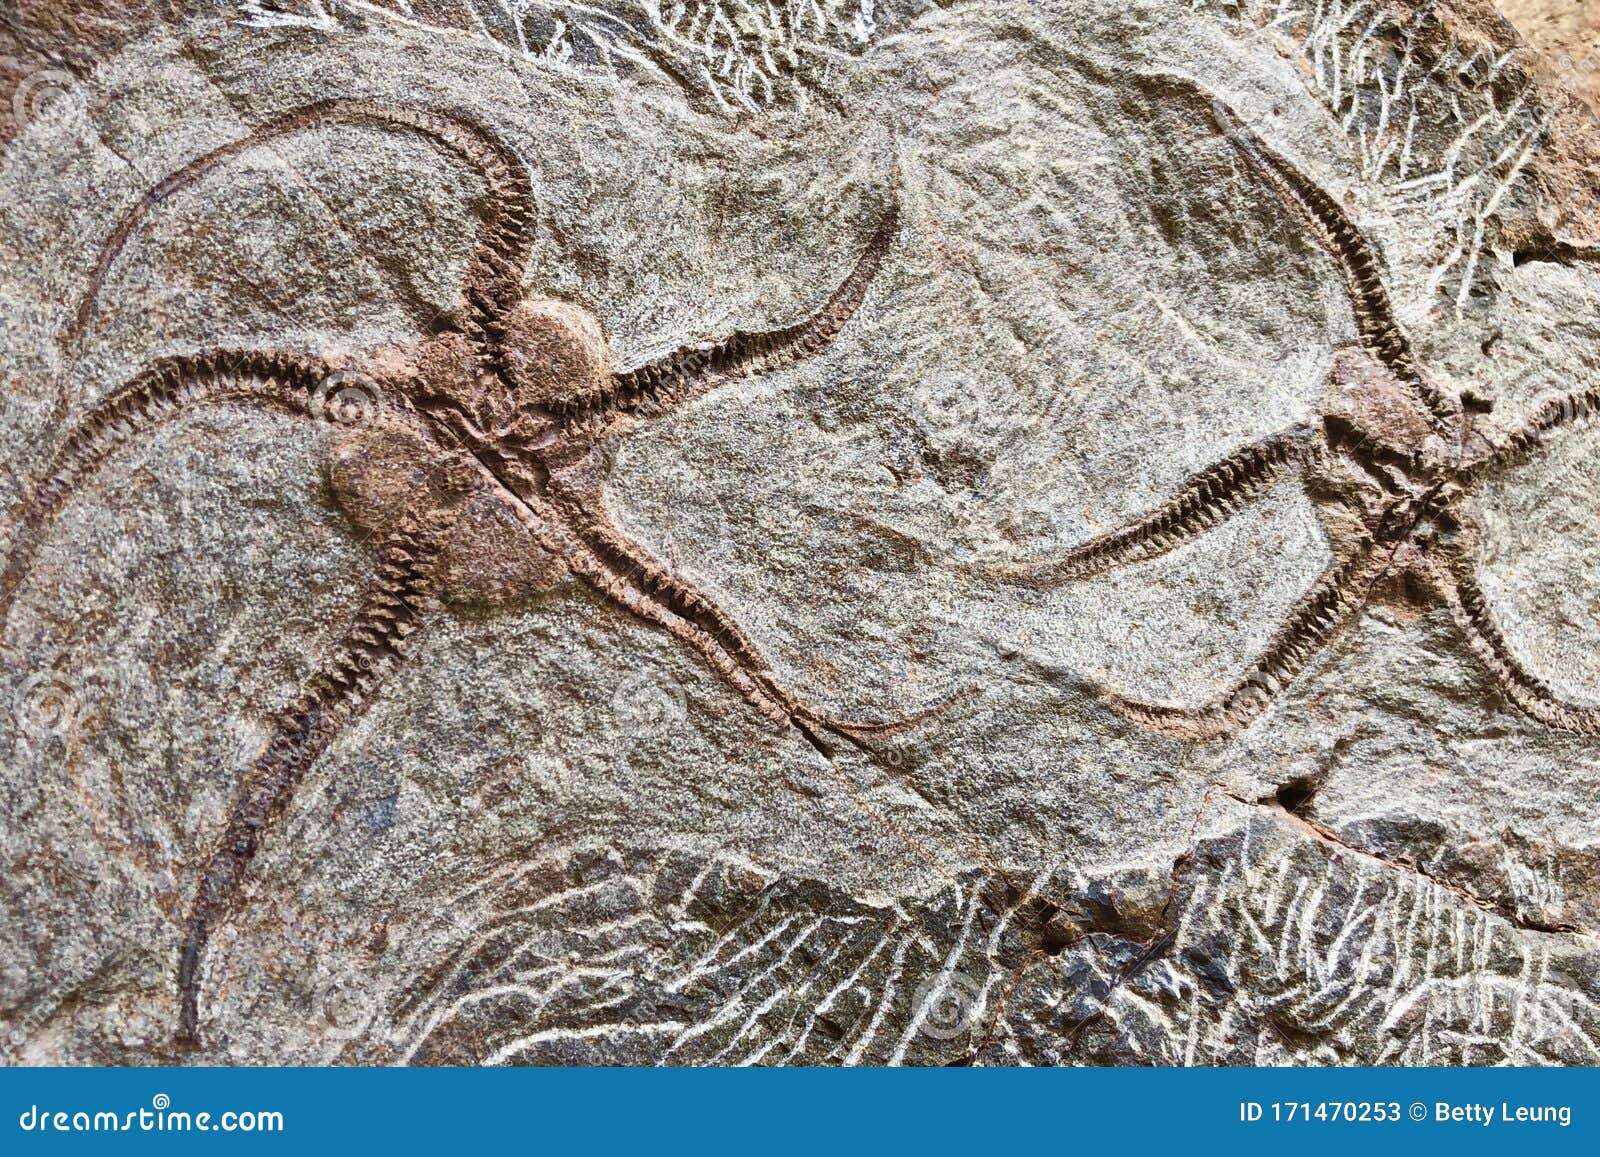 fossils of starfish ancestor found in sahara desert, morocco